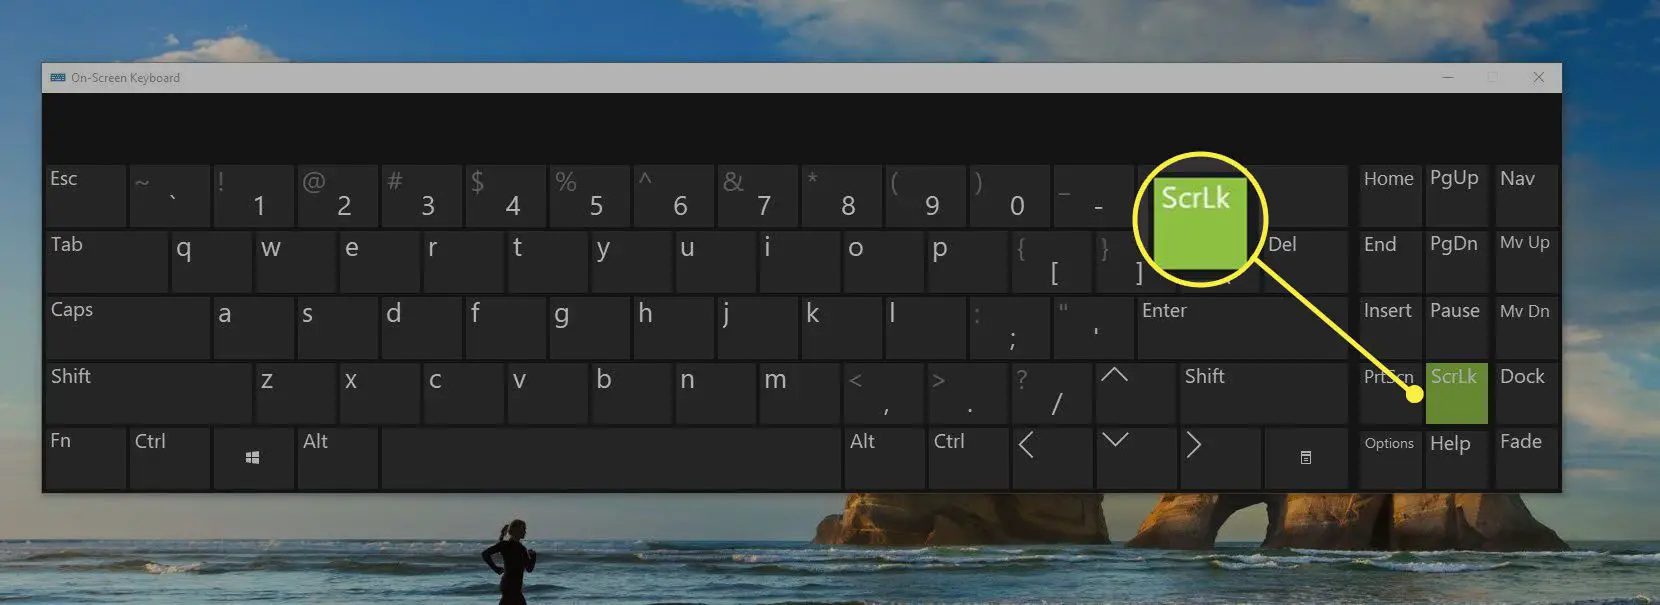 Botão ScrLk no teclado na tela